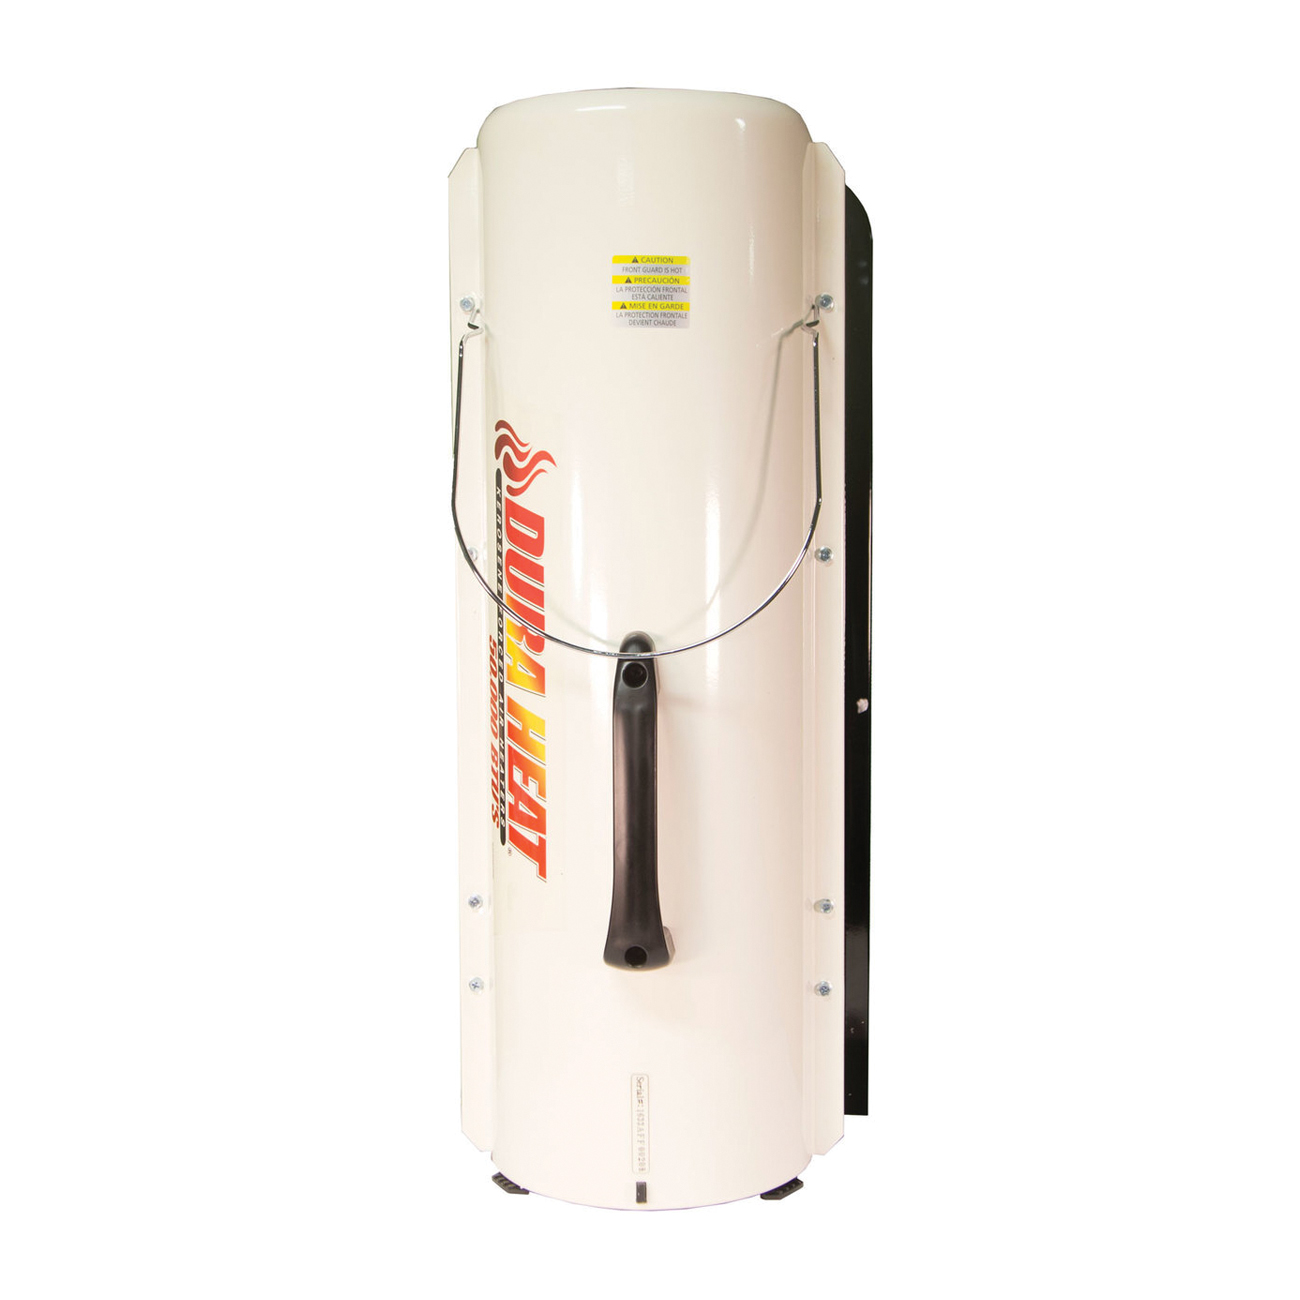 Dura Heat DFA50 Forced Air Heater with Carrying Handle, 5 gal Fuel Tank, Diesel, Kerosene, 50,000 Btu, White - 5